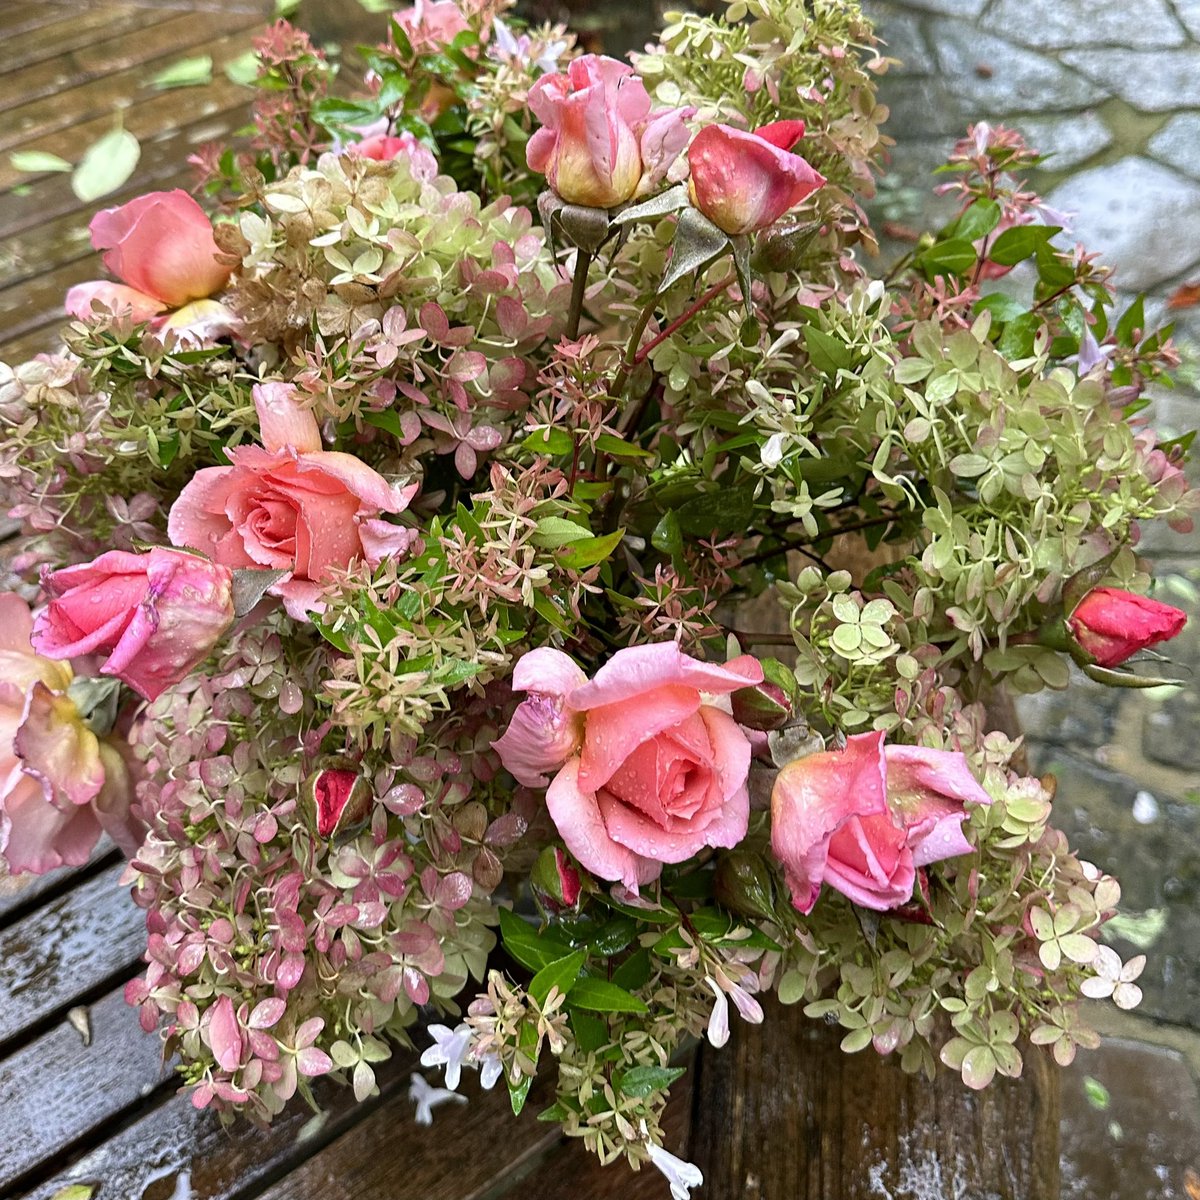 Little posy for today… #garden #plant #design #cutflowers #roses #hydrangeas #abelia